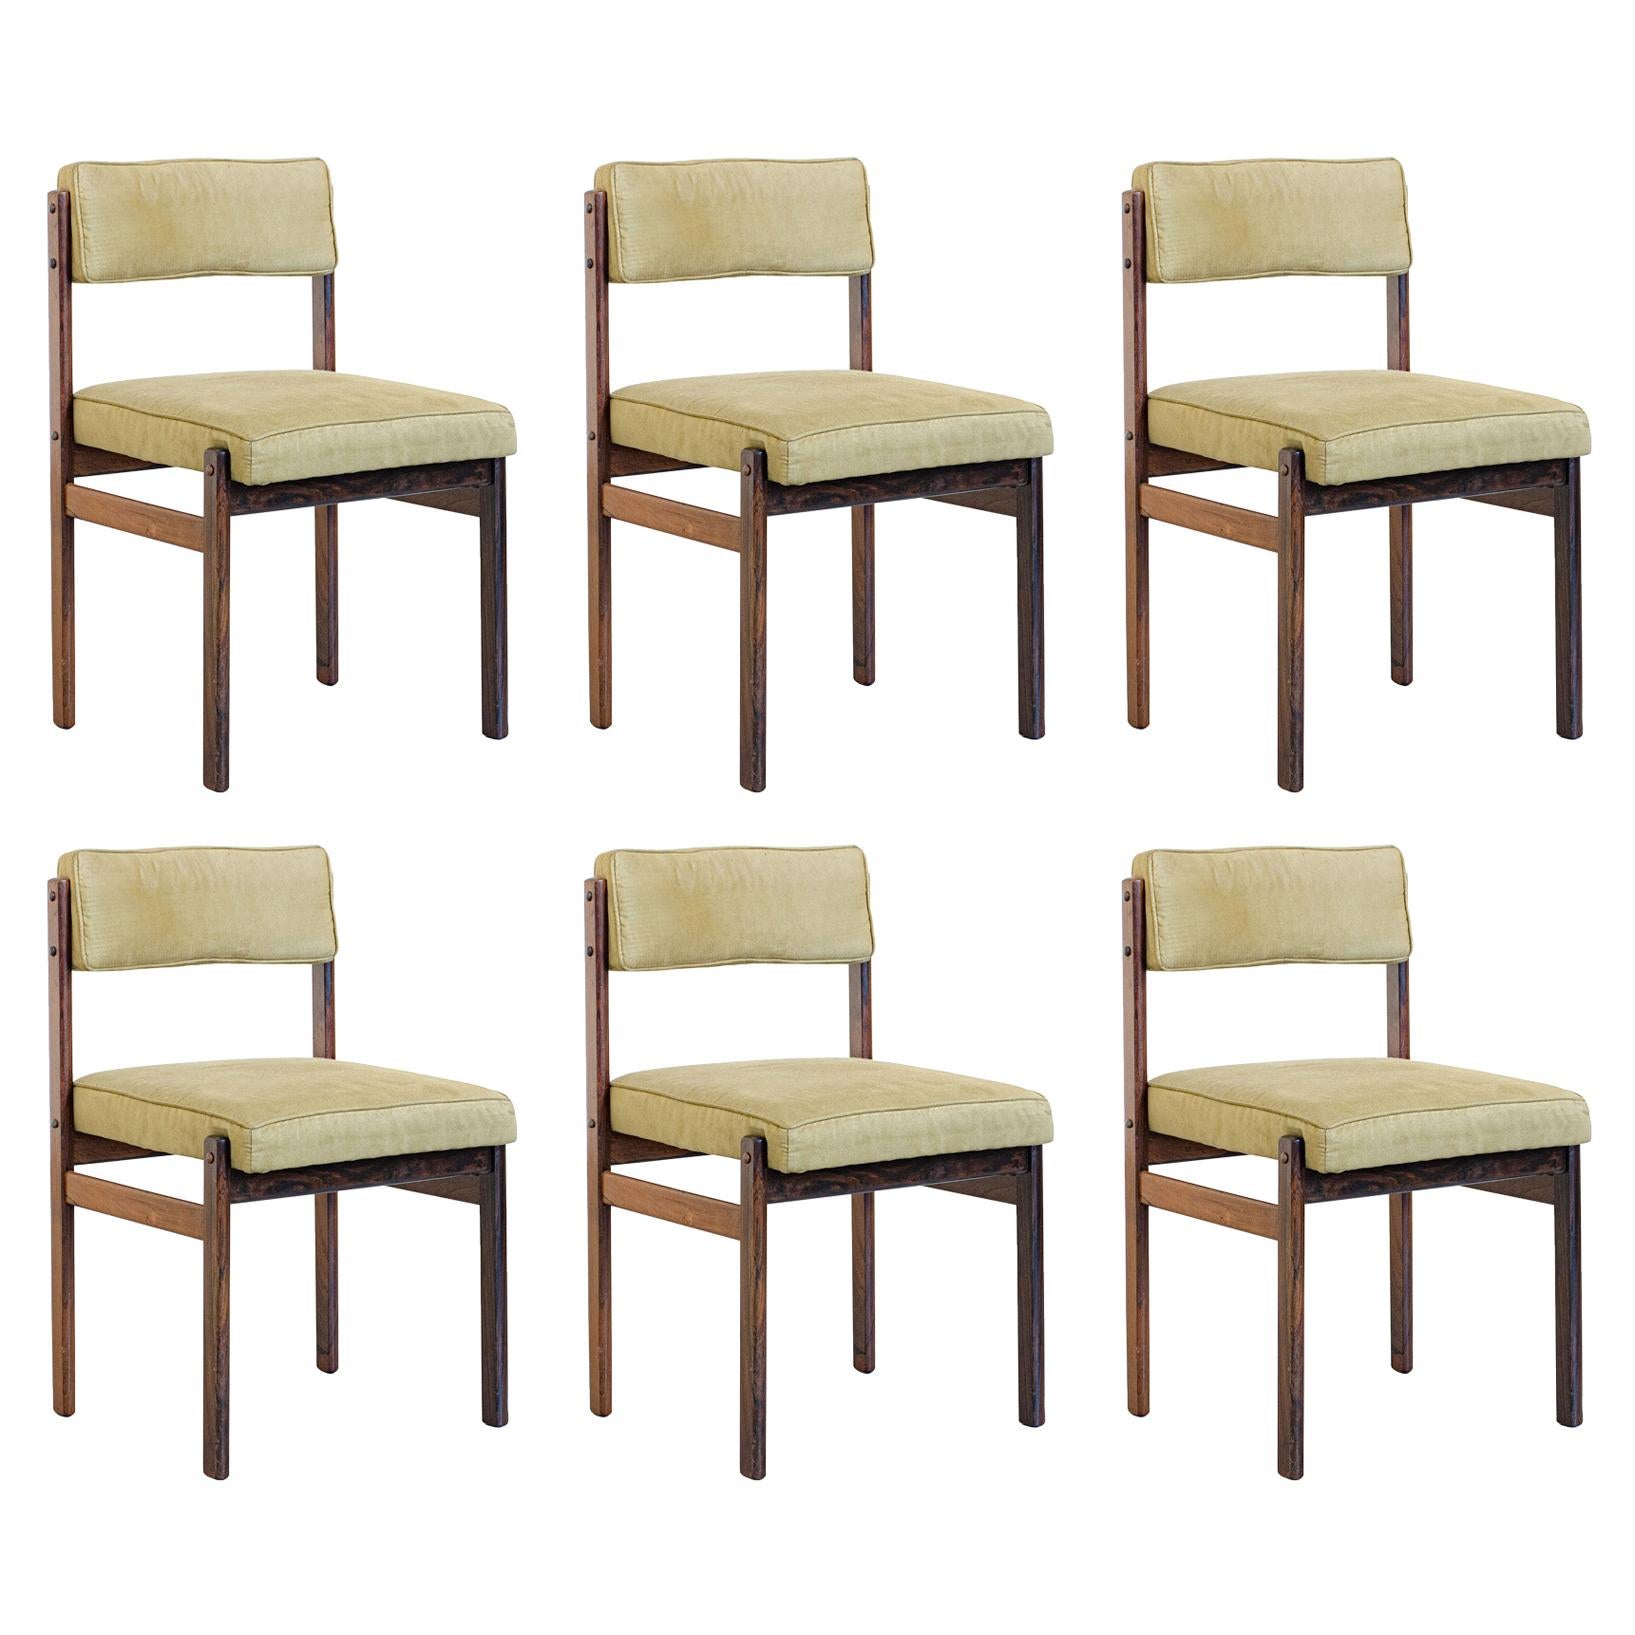 Set of 6 "Tião" Chairs, by Sergio Rodrigues, 1959, Jacaranda Rosewood